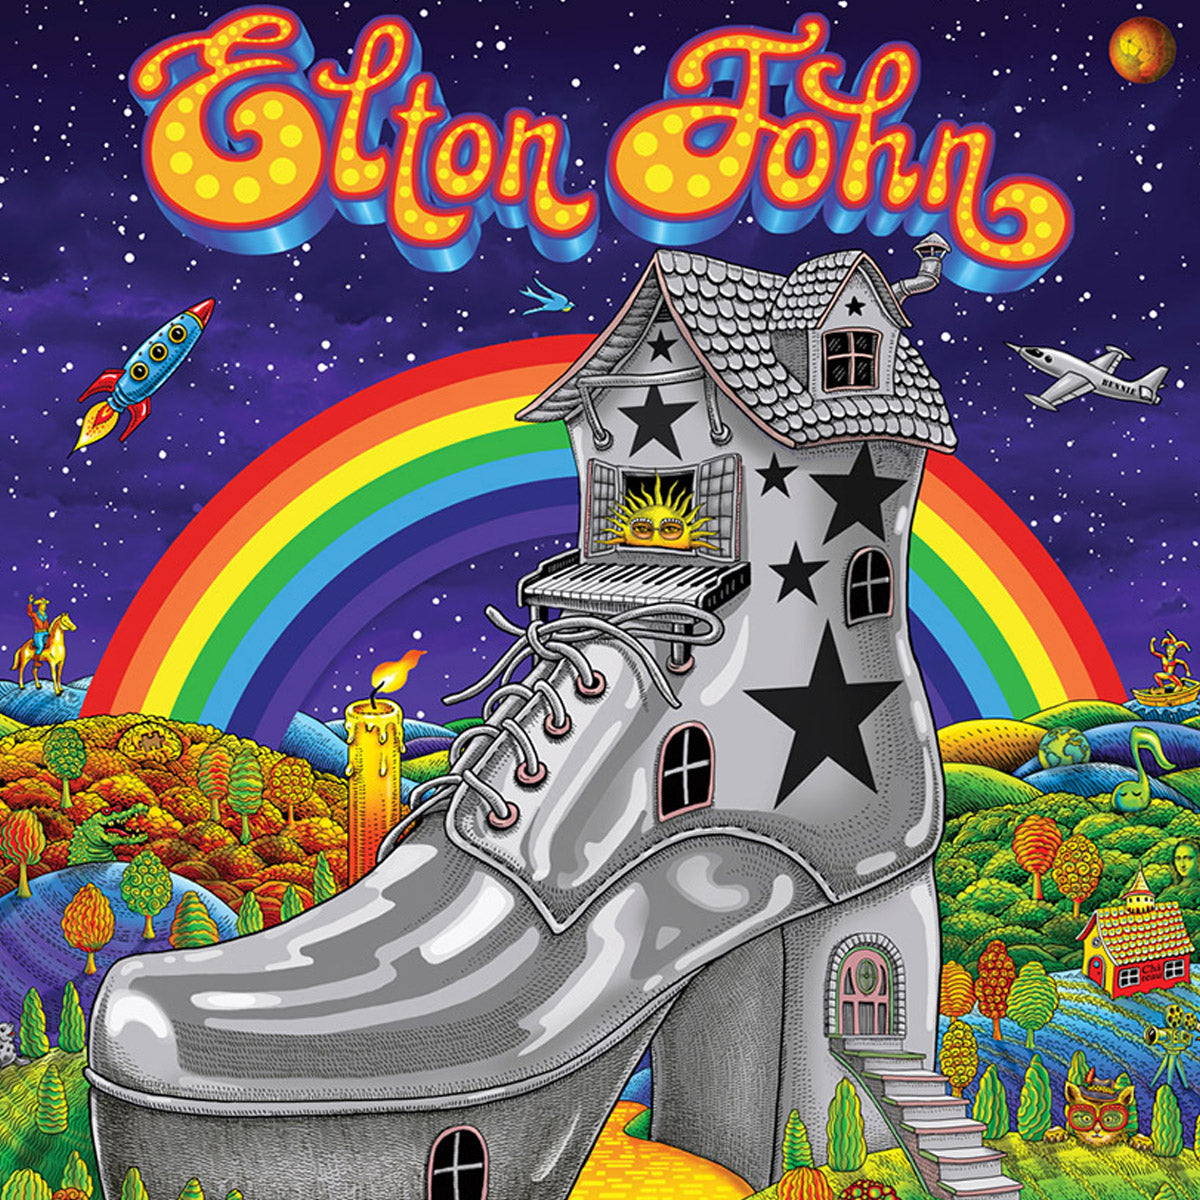 Elton John Las Vegas November 1, 2022 by Emek (Artist Proof Edition)